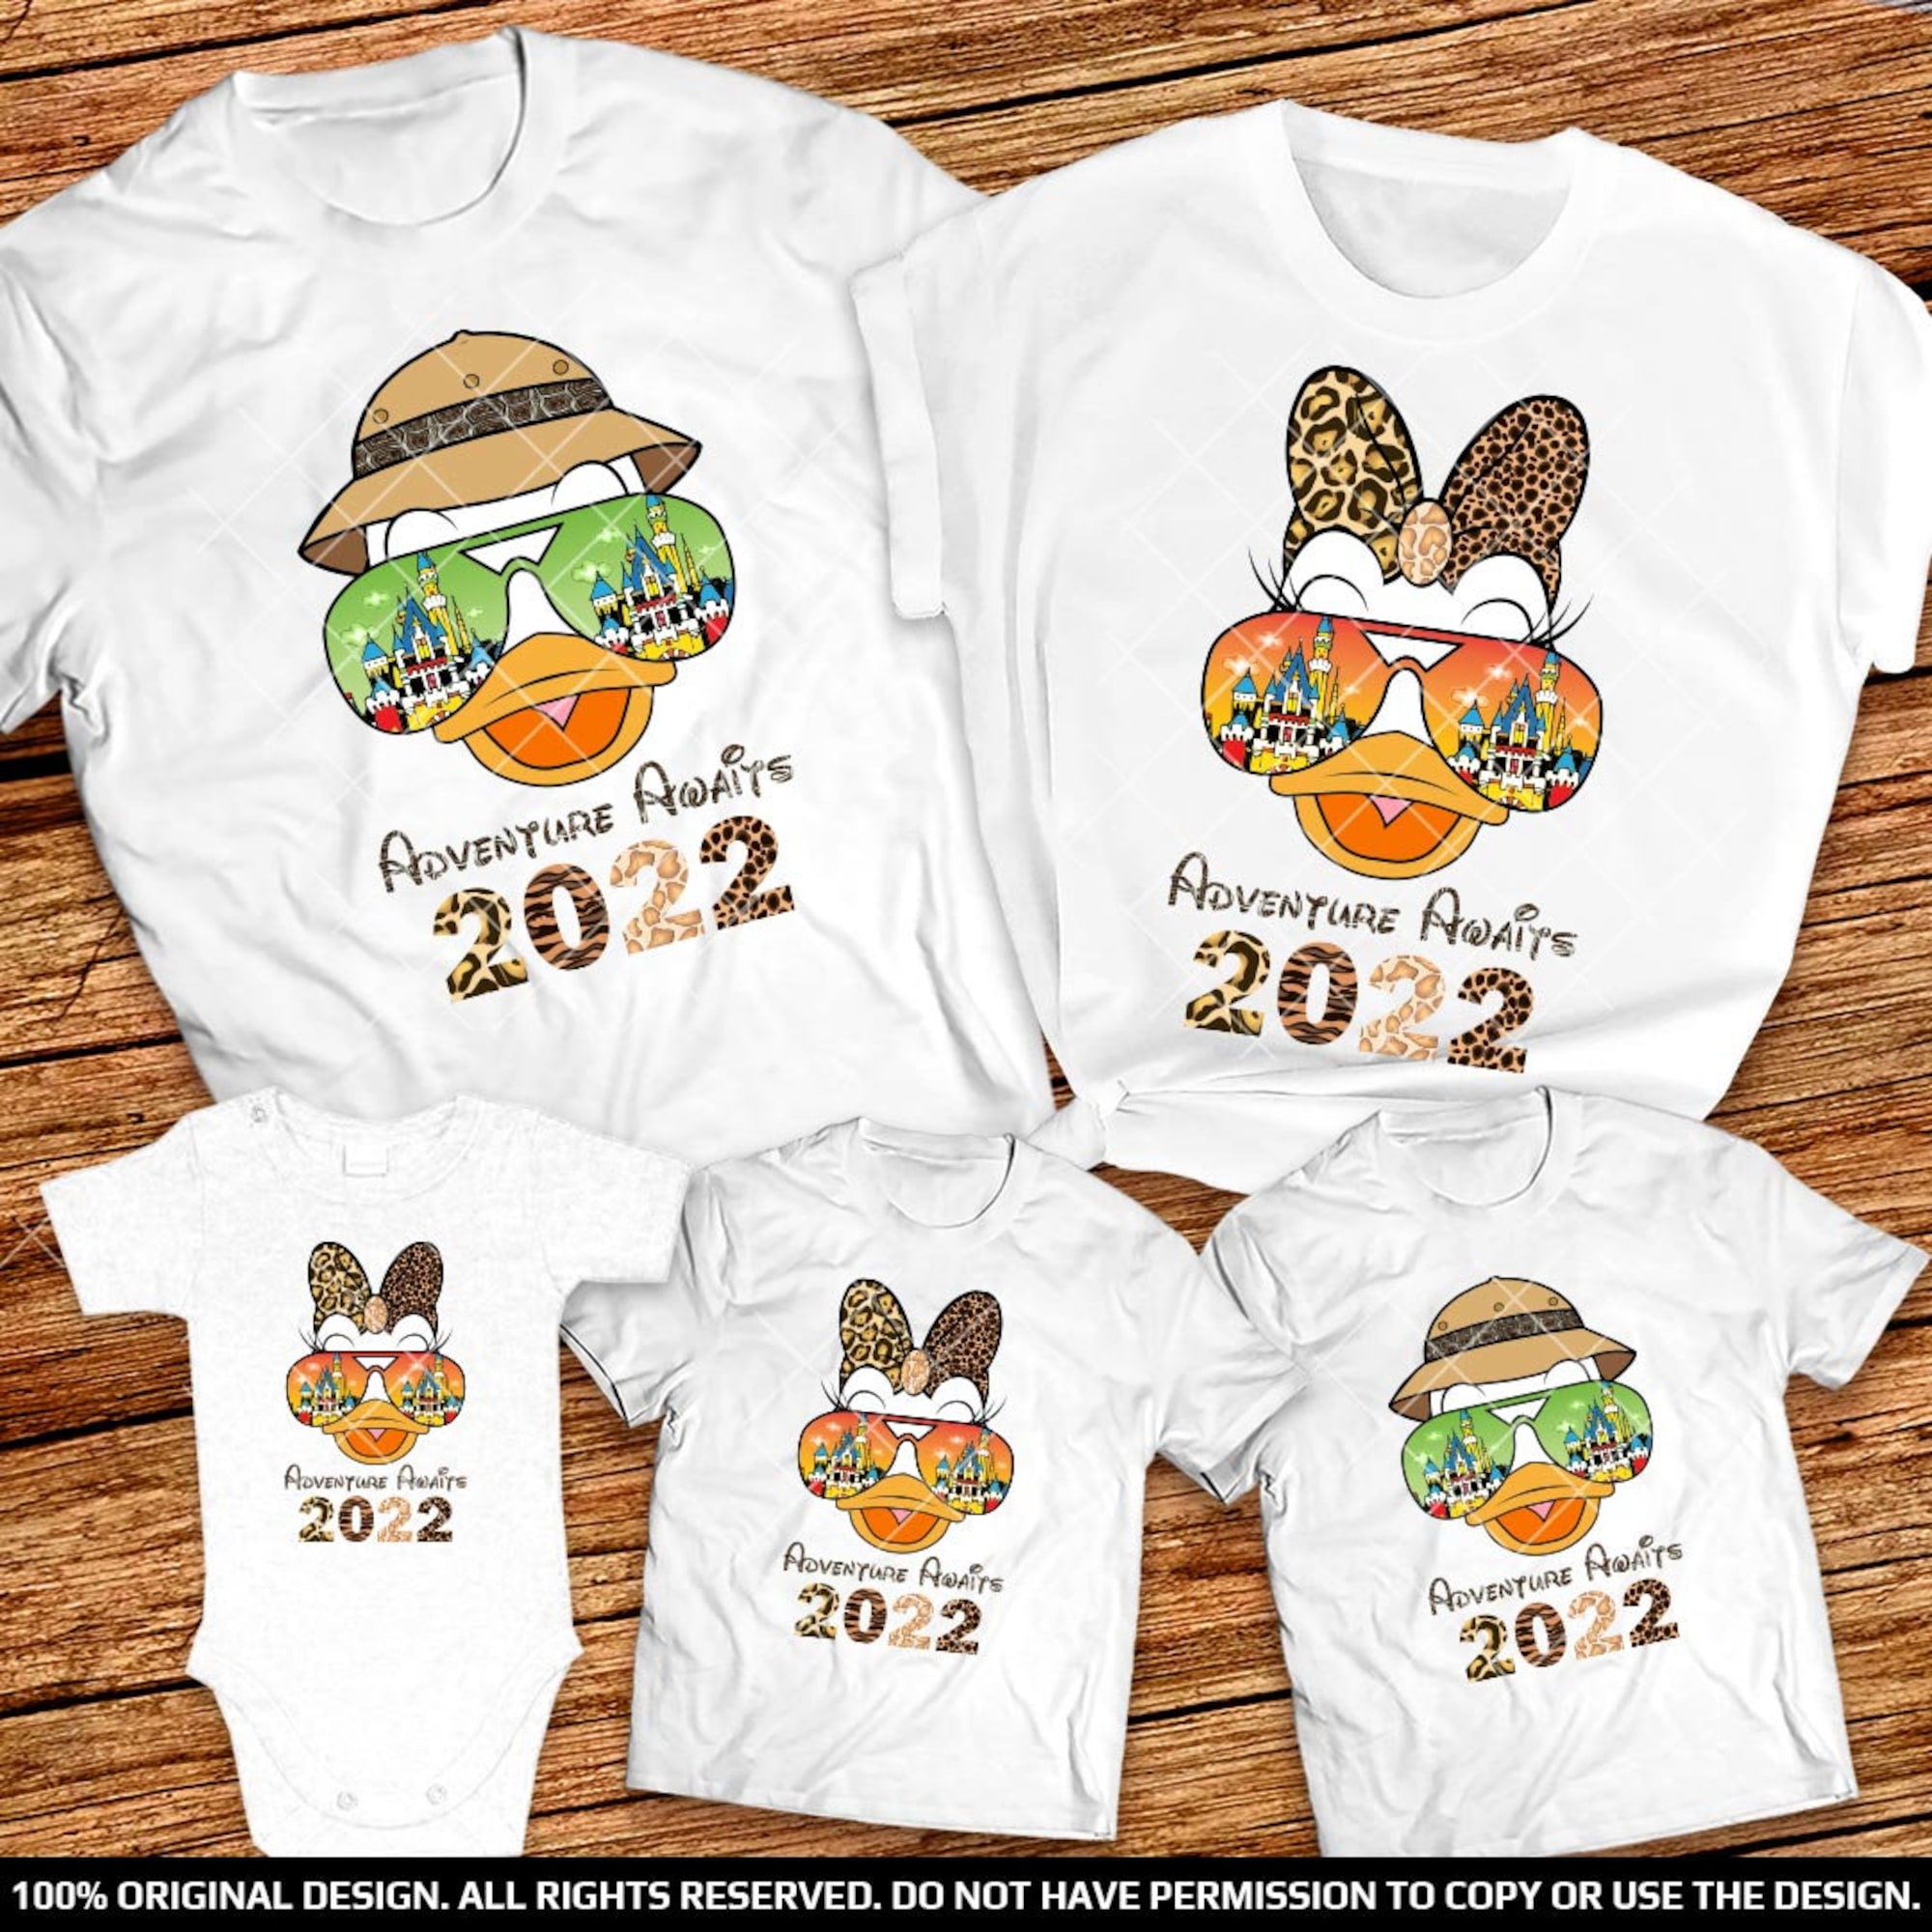 Discover Donald Und Daisy Animal Kingdom Theme Disney Custom Safari Mode T-shirt